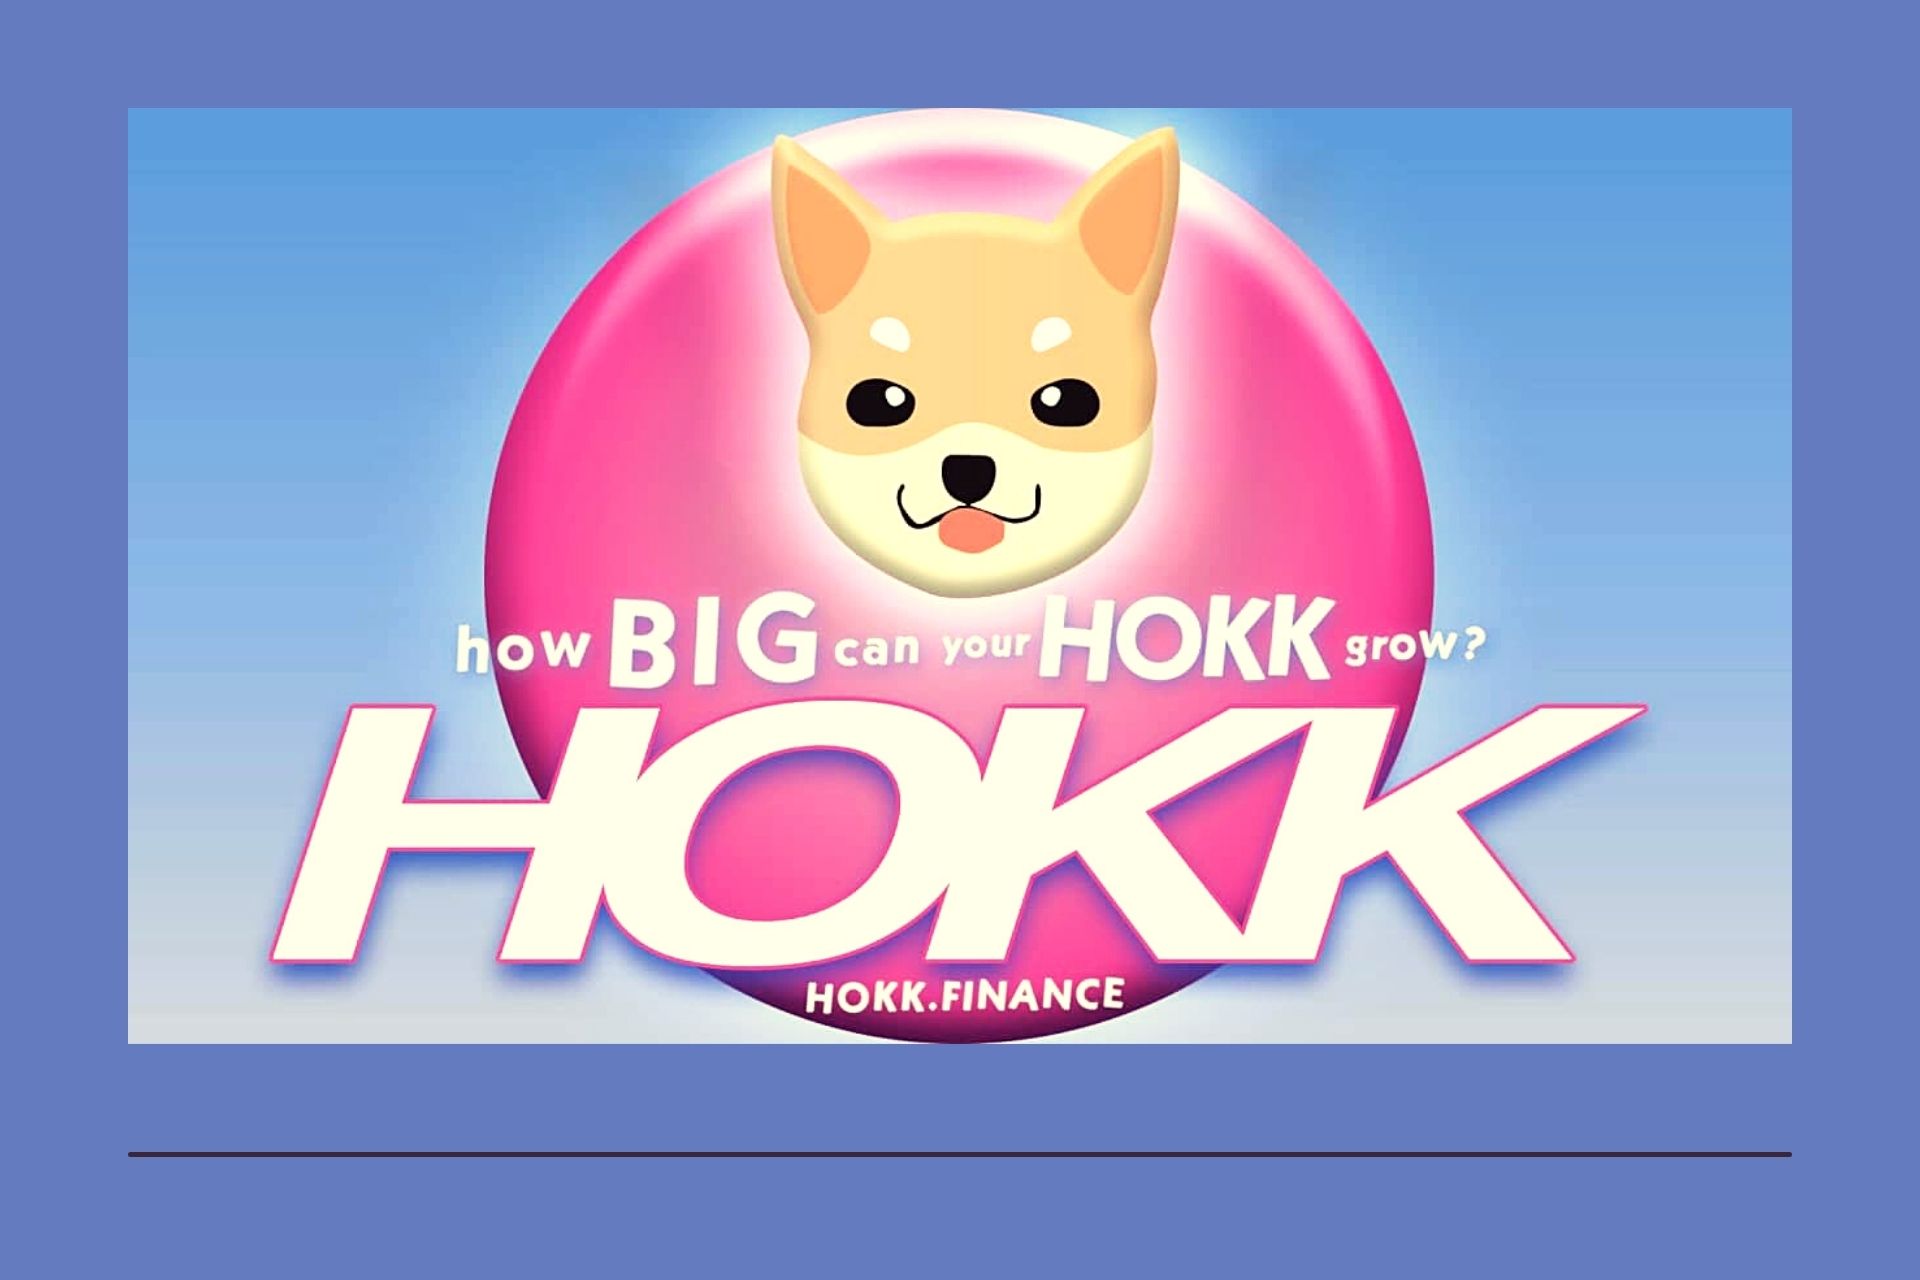 Hokk Finance